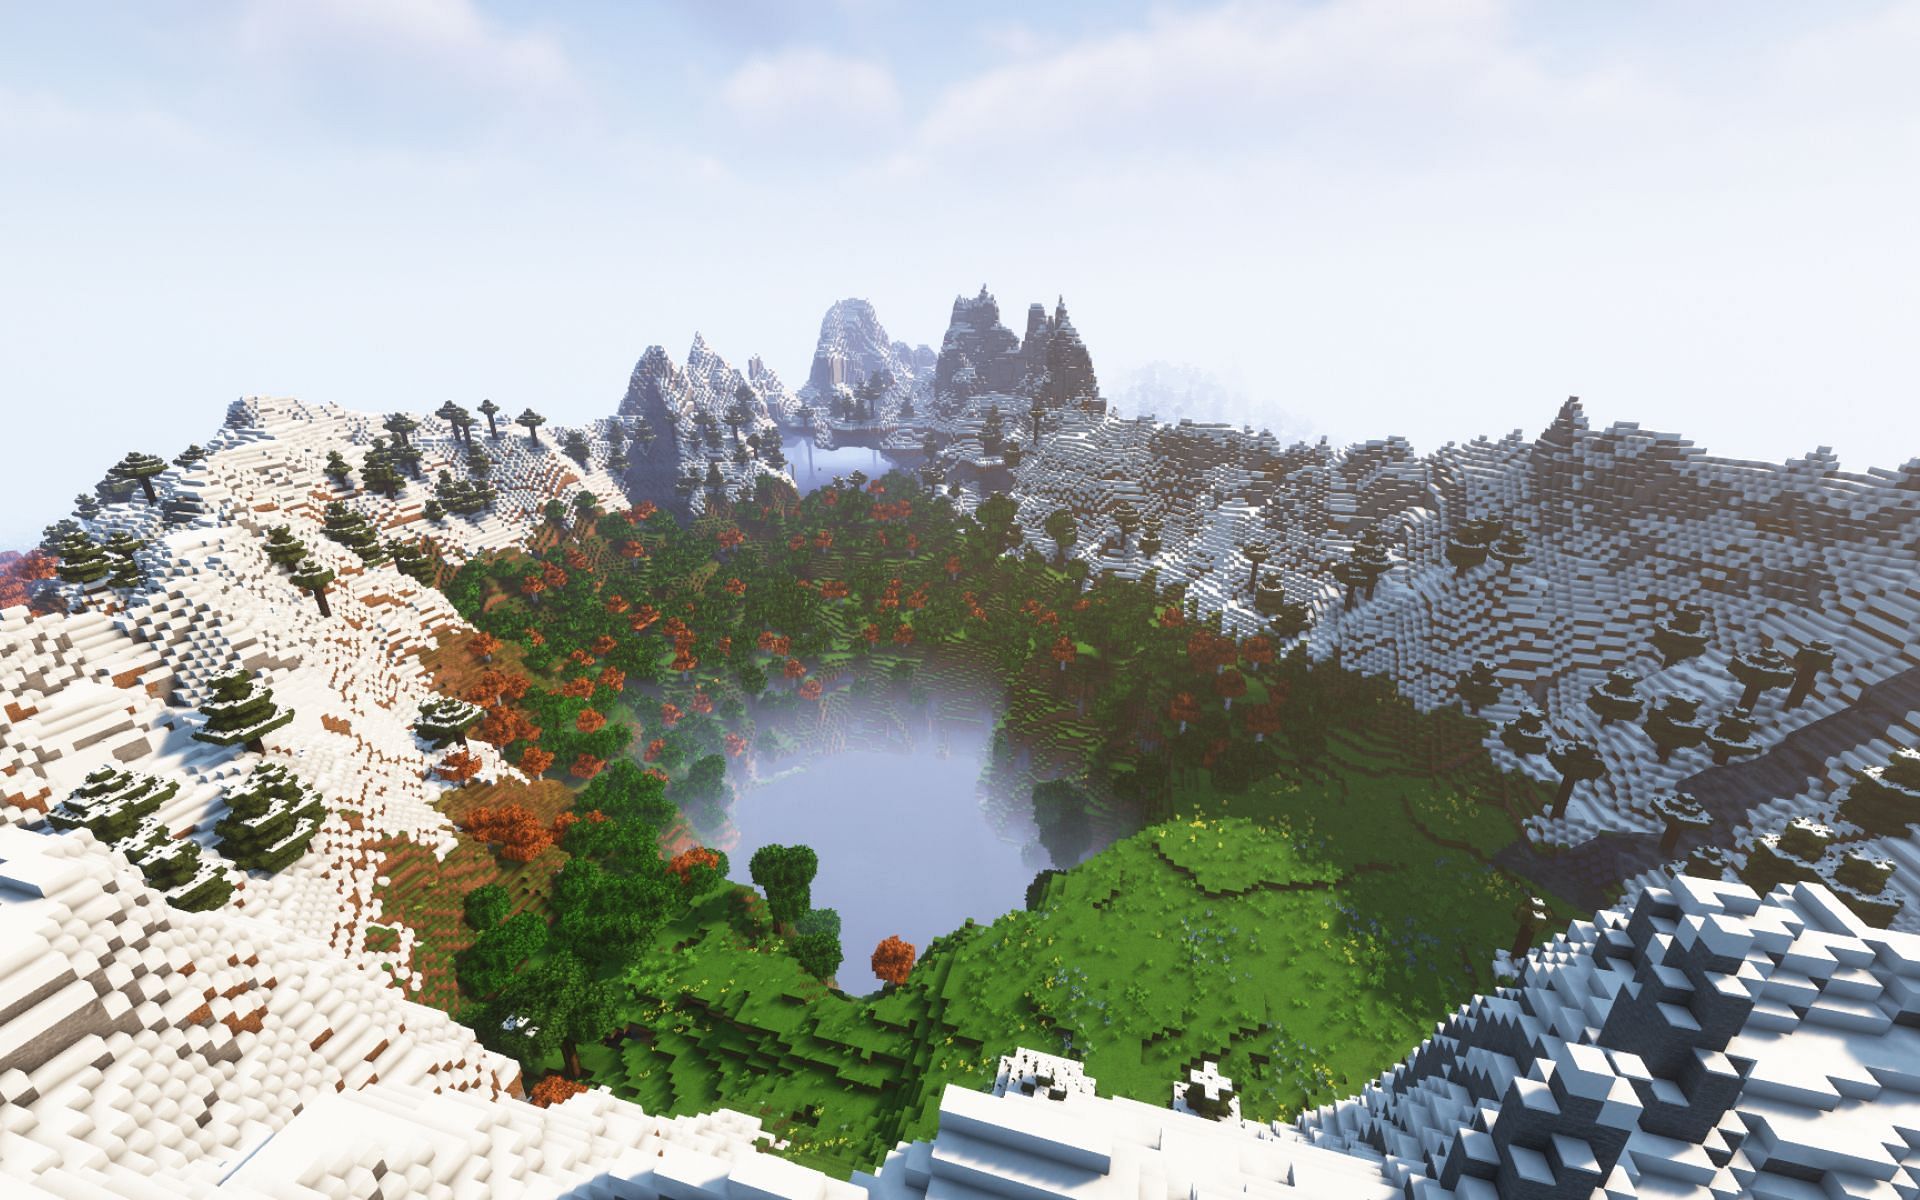 An image of a donut-shaped mountain range in Minecraft. (Image via u/Zero_CTRL on Reddit)